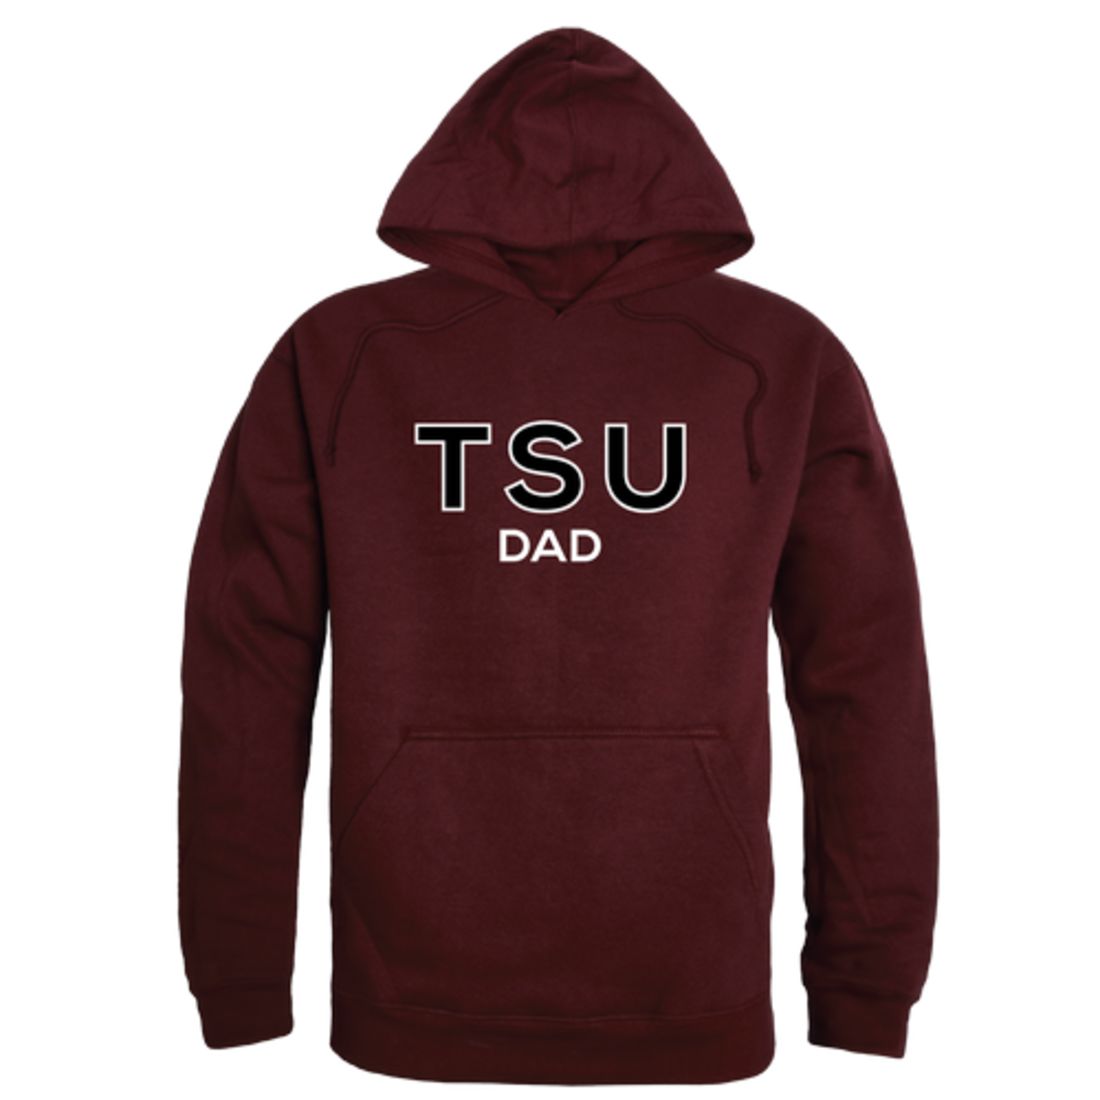 TSU Texas Southern University Tigers Dad Fleece Hoodie Sweatshirts Heather Grey-Campus-Wardrobe